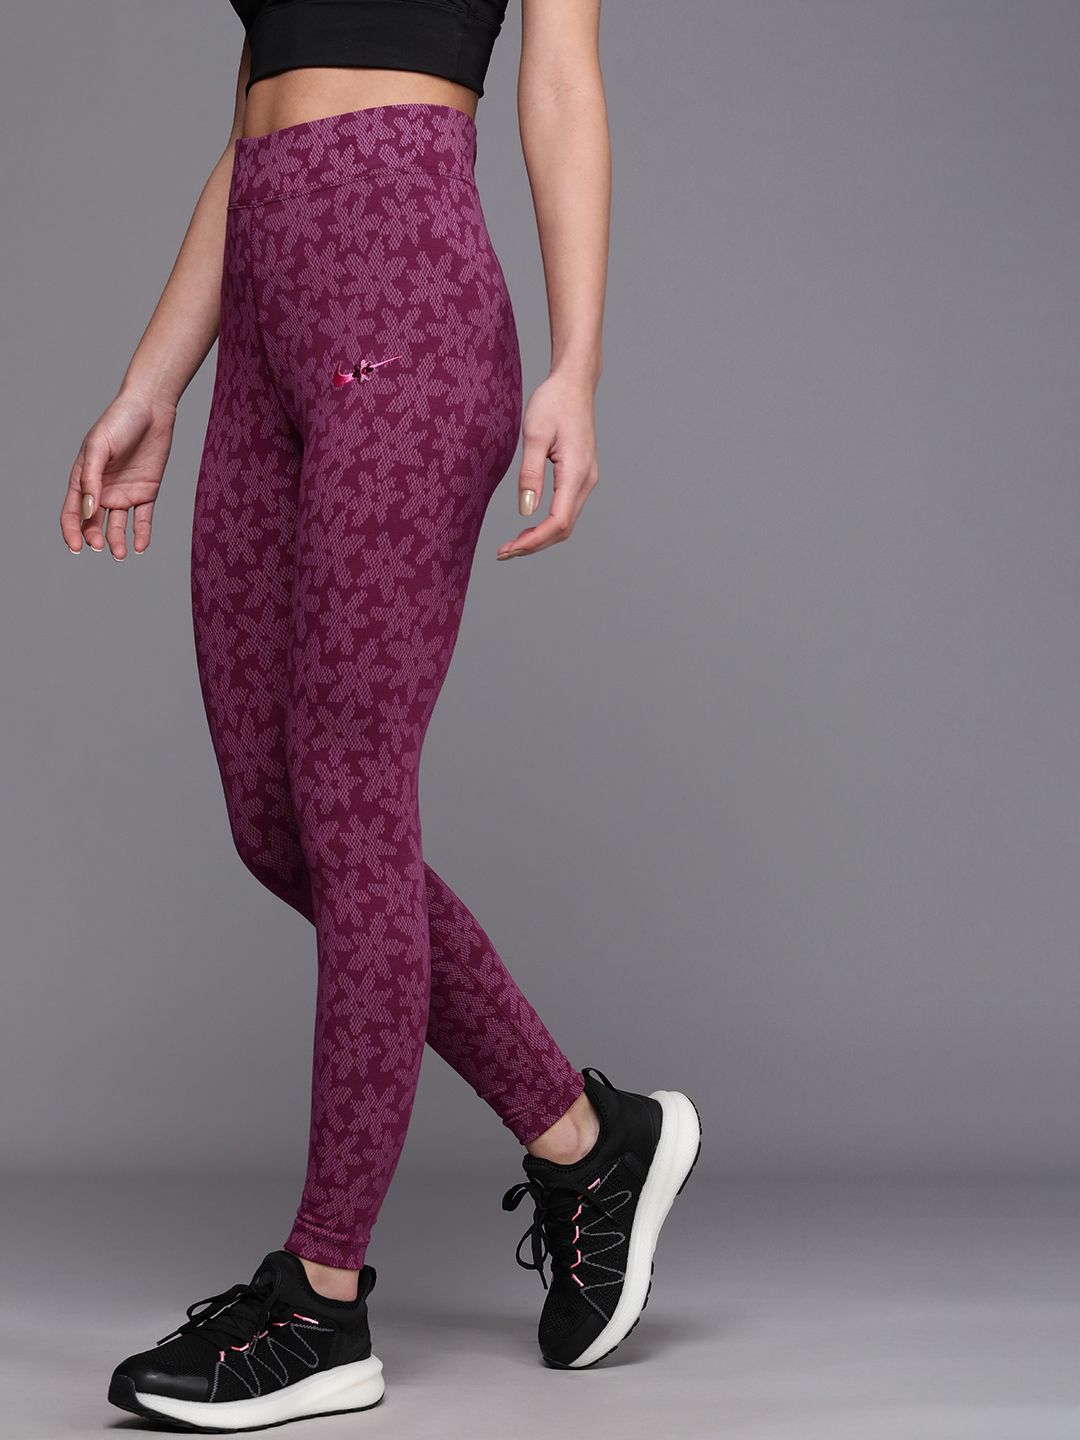 Nike Women Magenta Printed High-Rise Tights Price in India